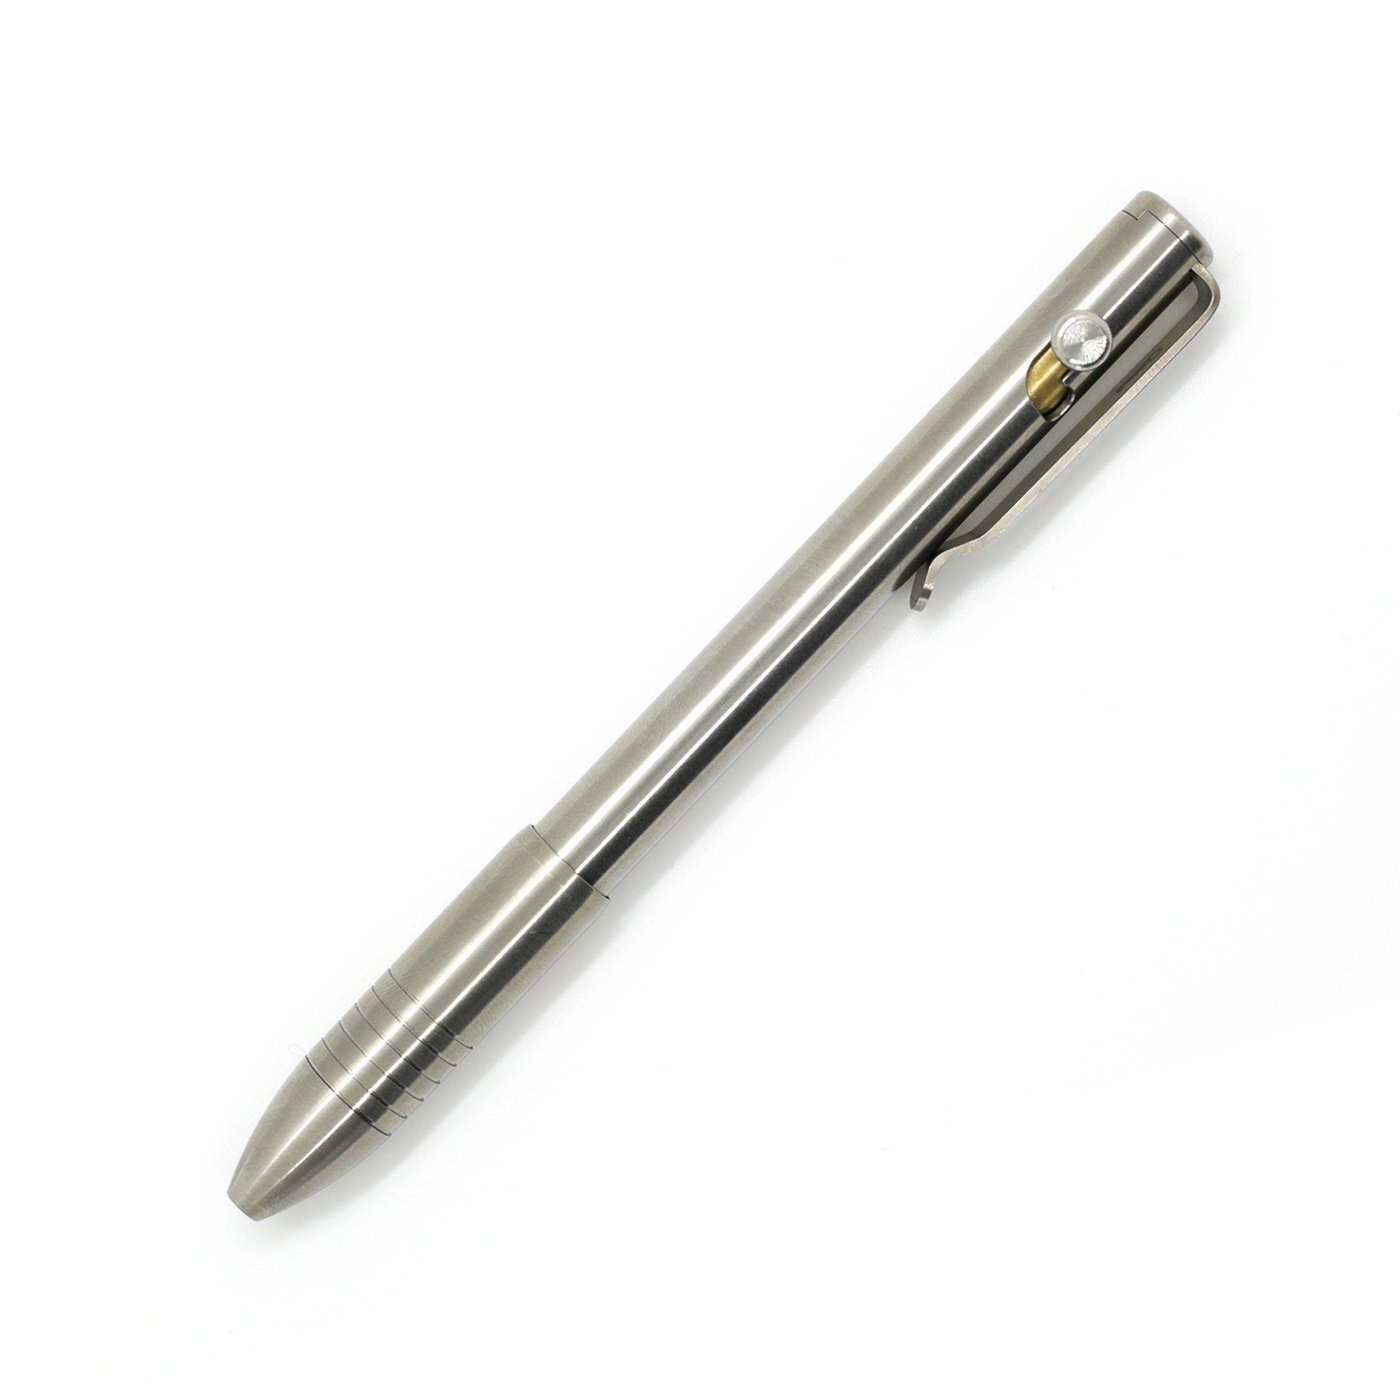  YUEZUDPO Bolt Action Pen, Solid Brass edc Pen Six